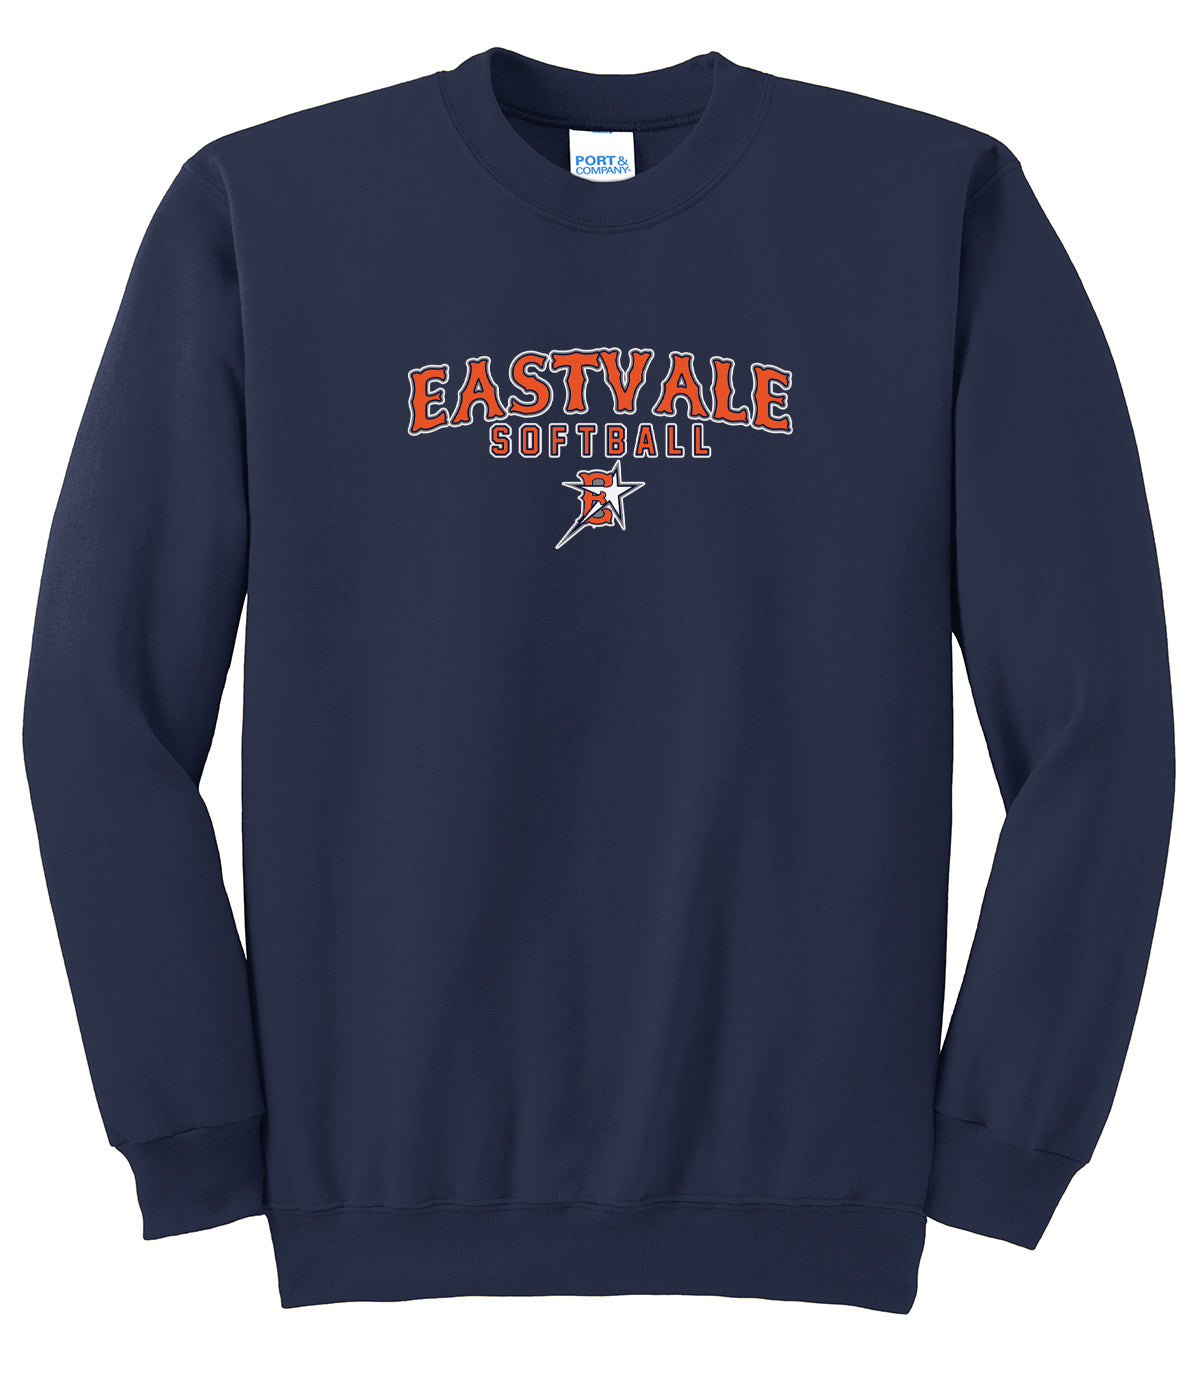 Eastvale Girl's Softball Crew Neck Sweater